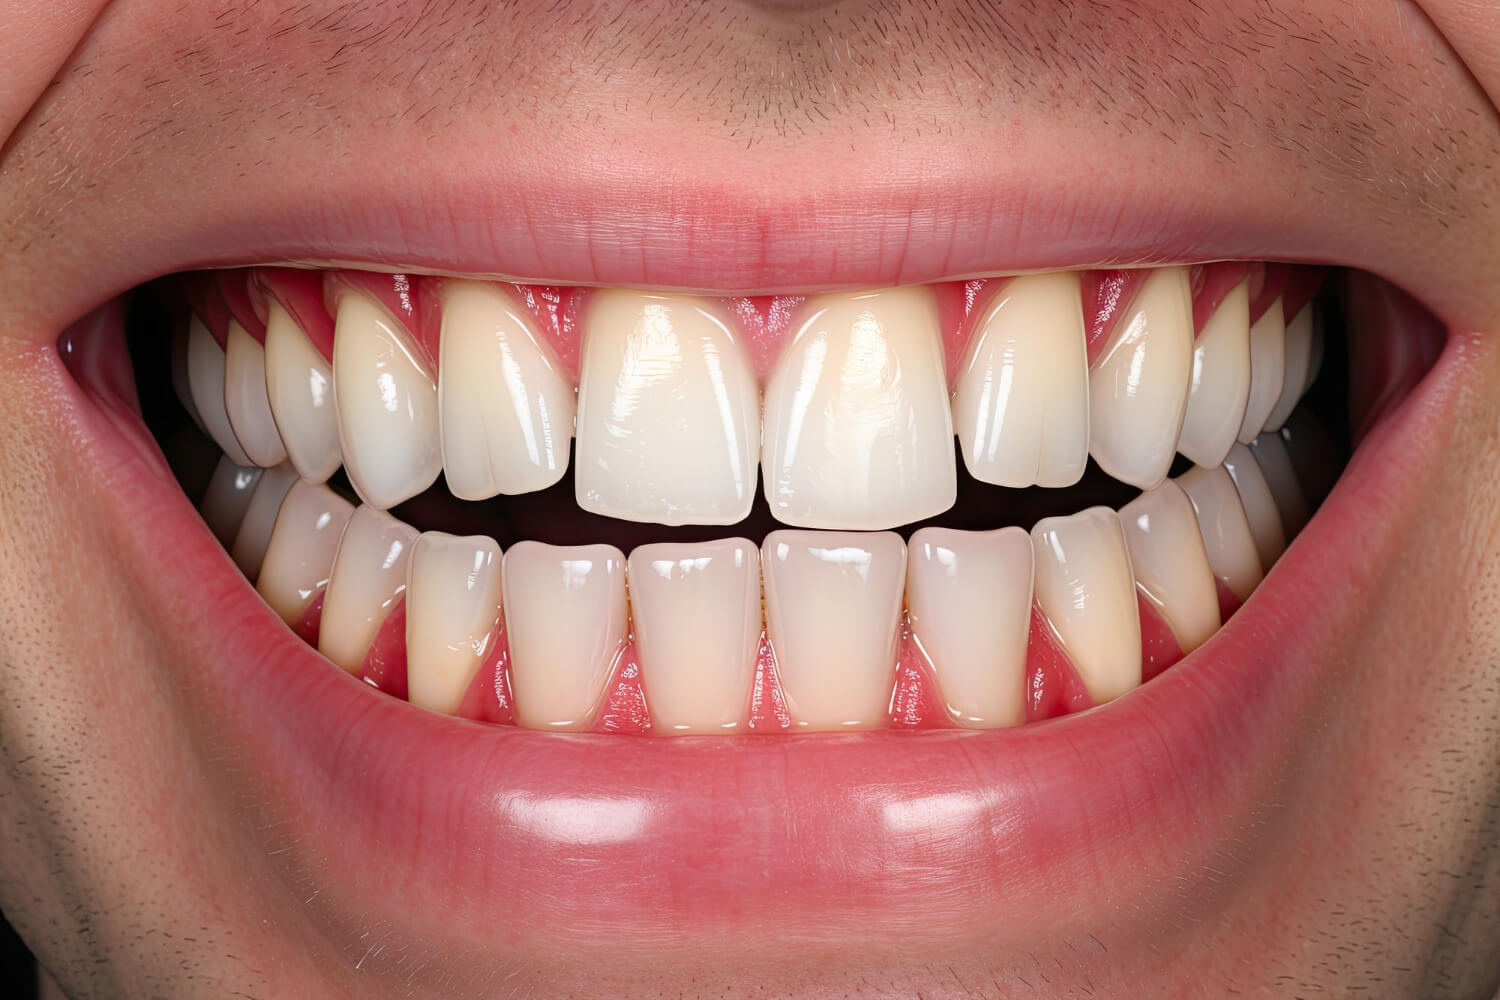 Dental restoration implants